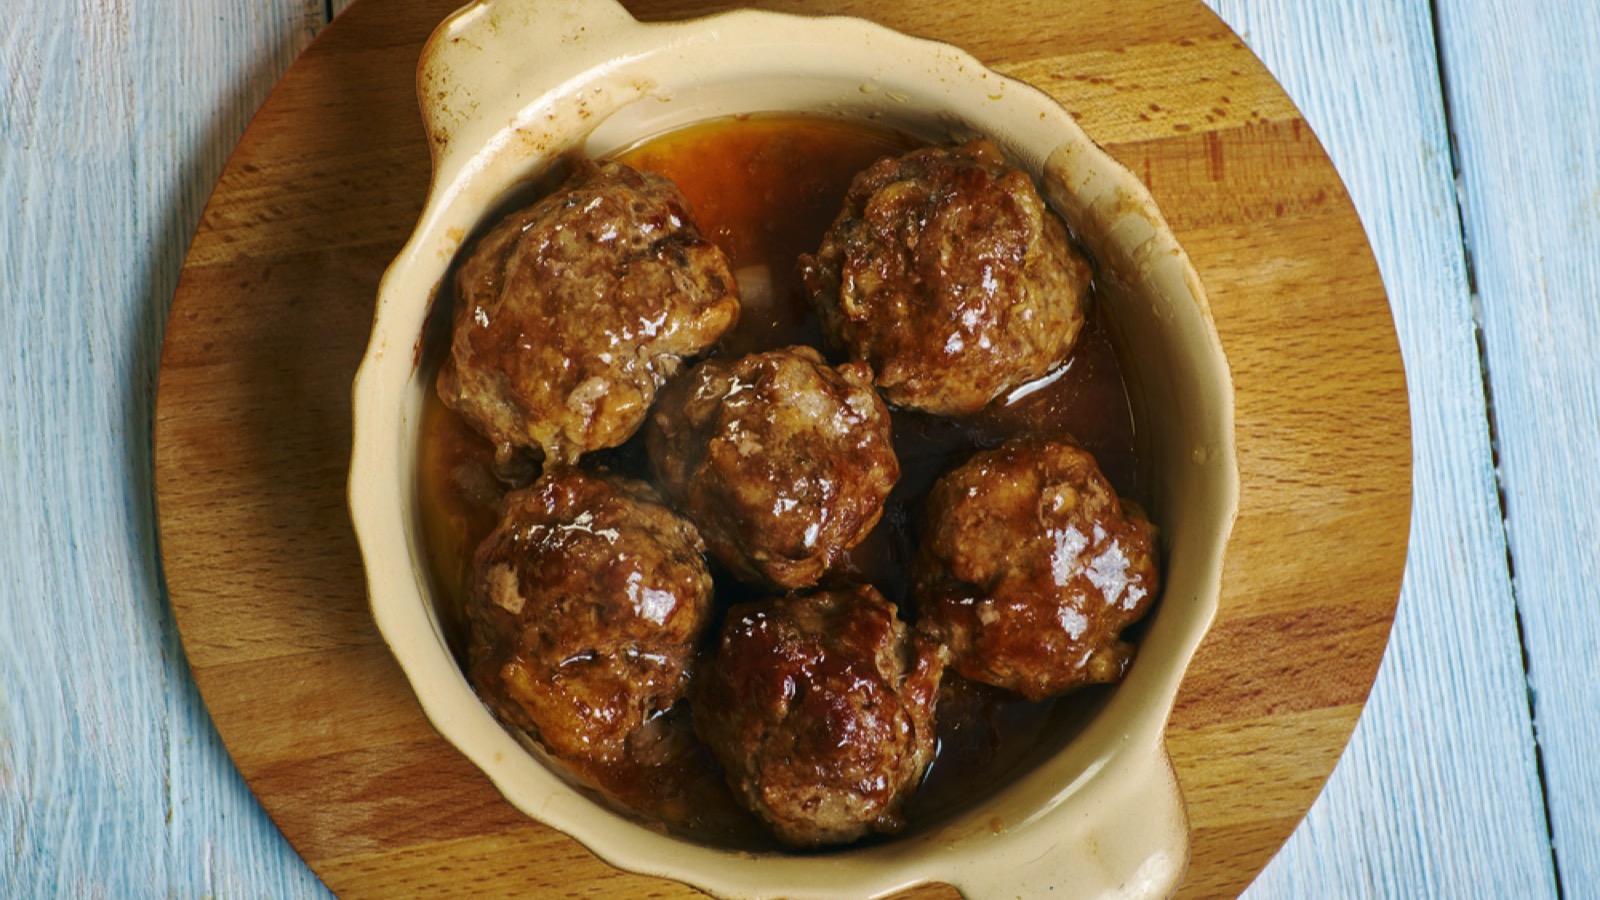 Boulets sauce lapin à la Liègeoise - popular Belgian dish known as boulets liégeoise consists of beef and pork meatballs